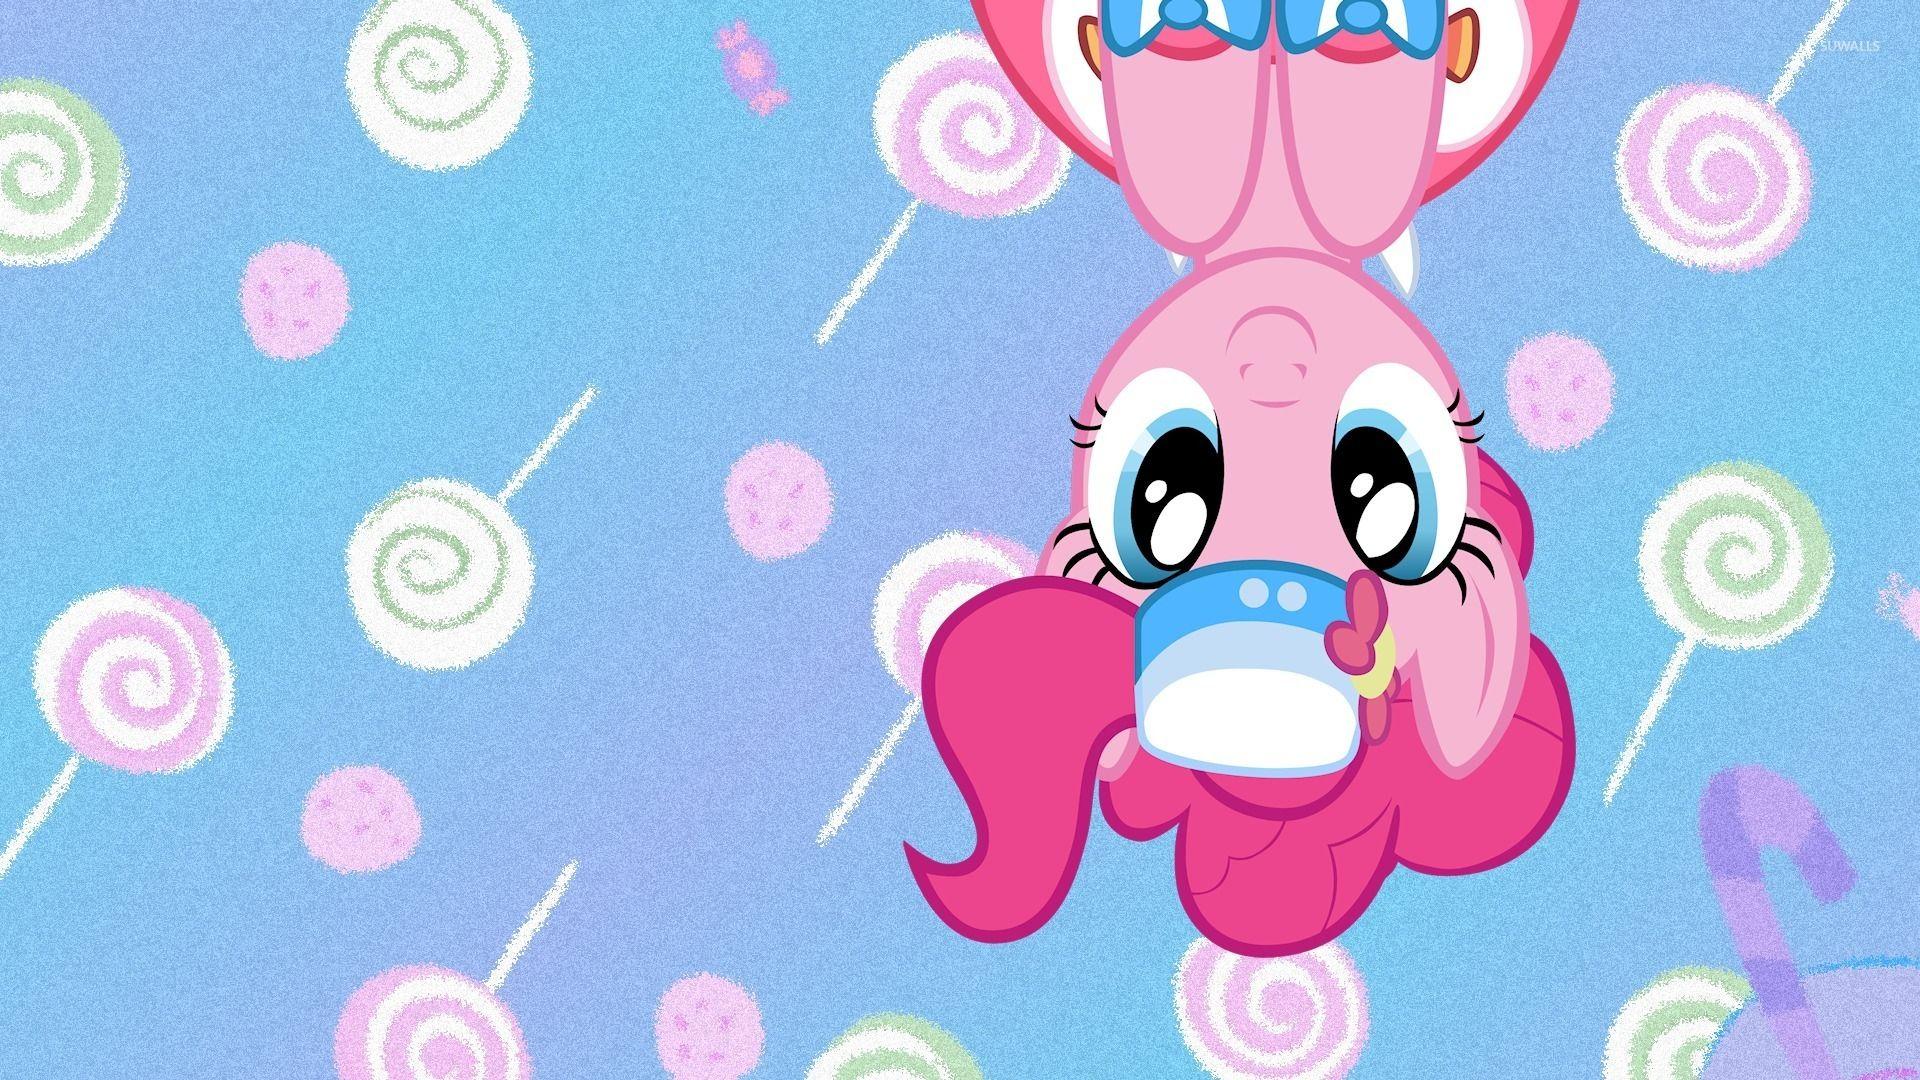 Upside down Pinkie Pie from My Little Pony wallpaper